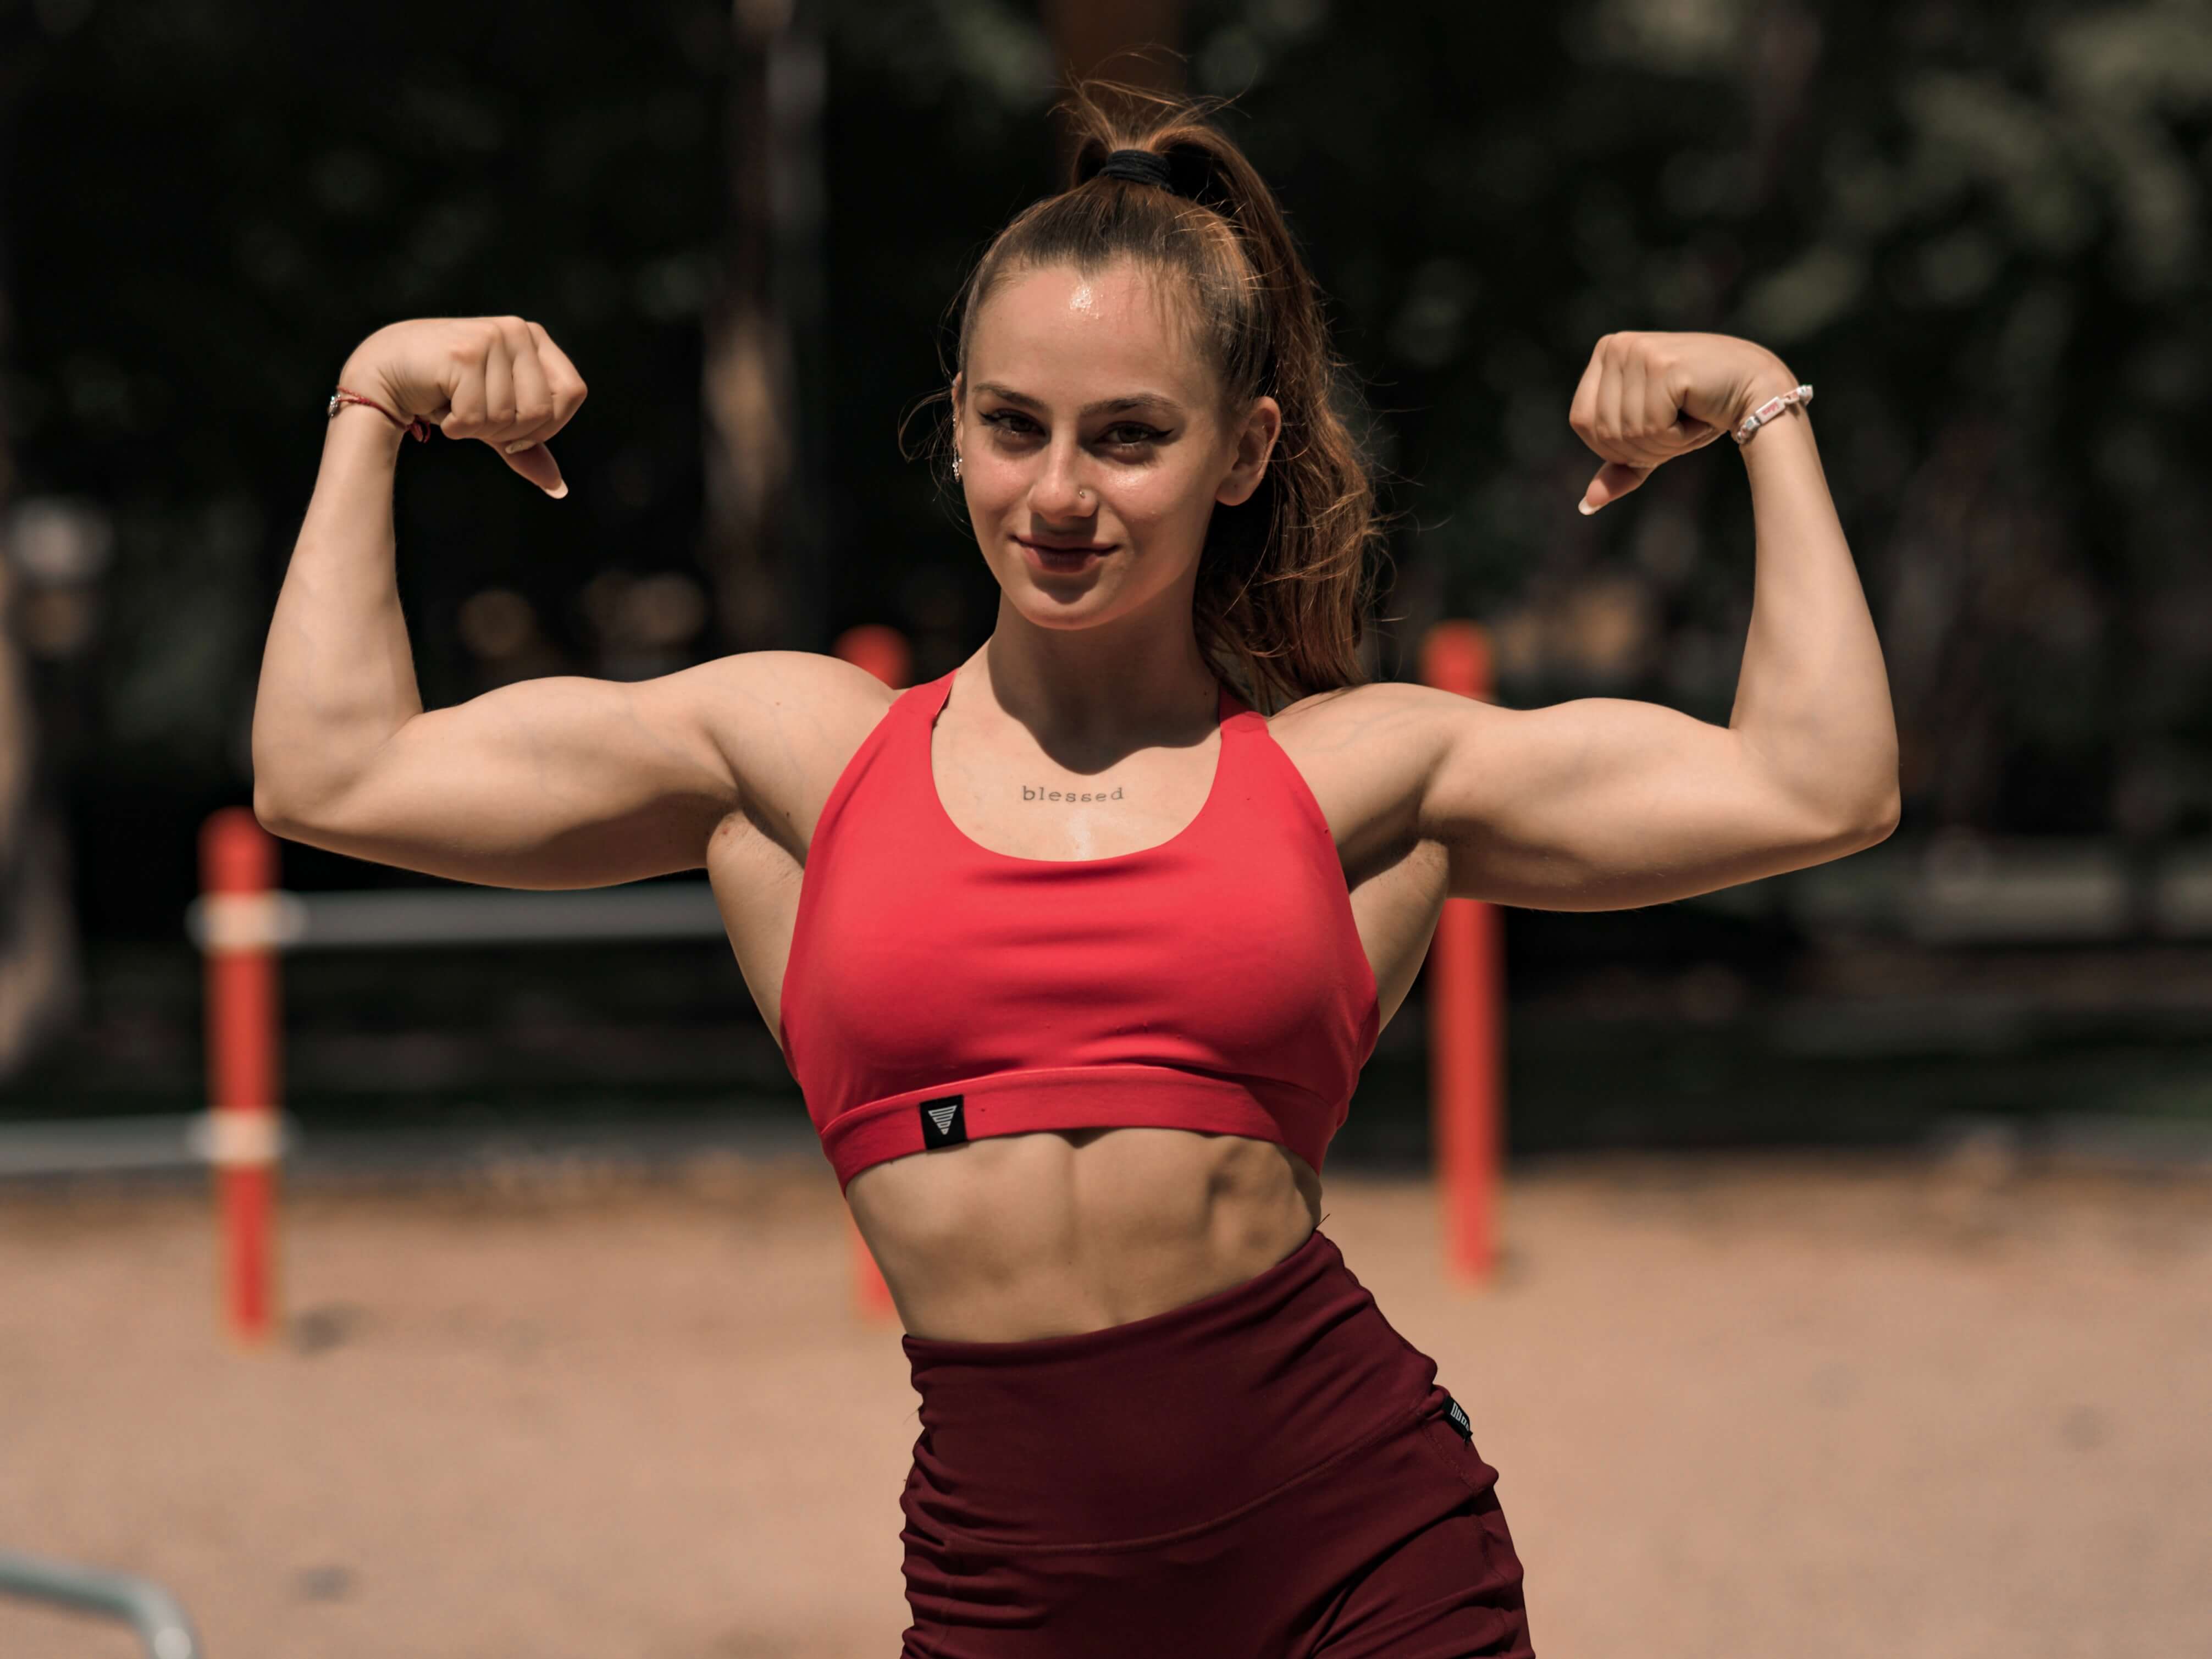 jasmina svilenova the strongest bulgarian calisthenics female athlete flexing her mucsles while wearing clothing by gornation